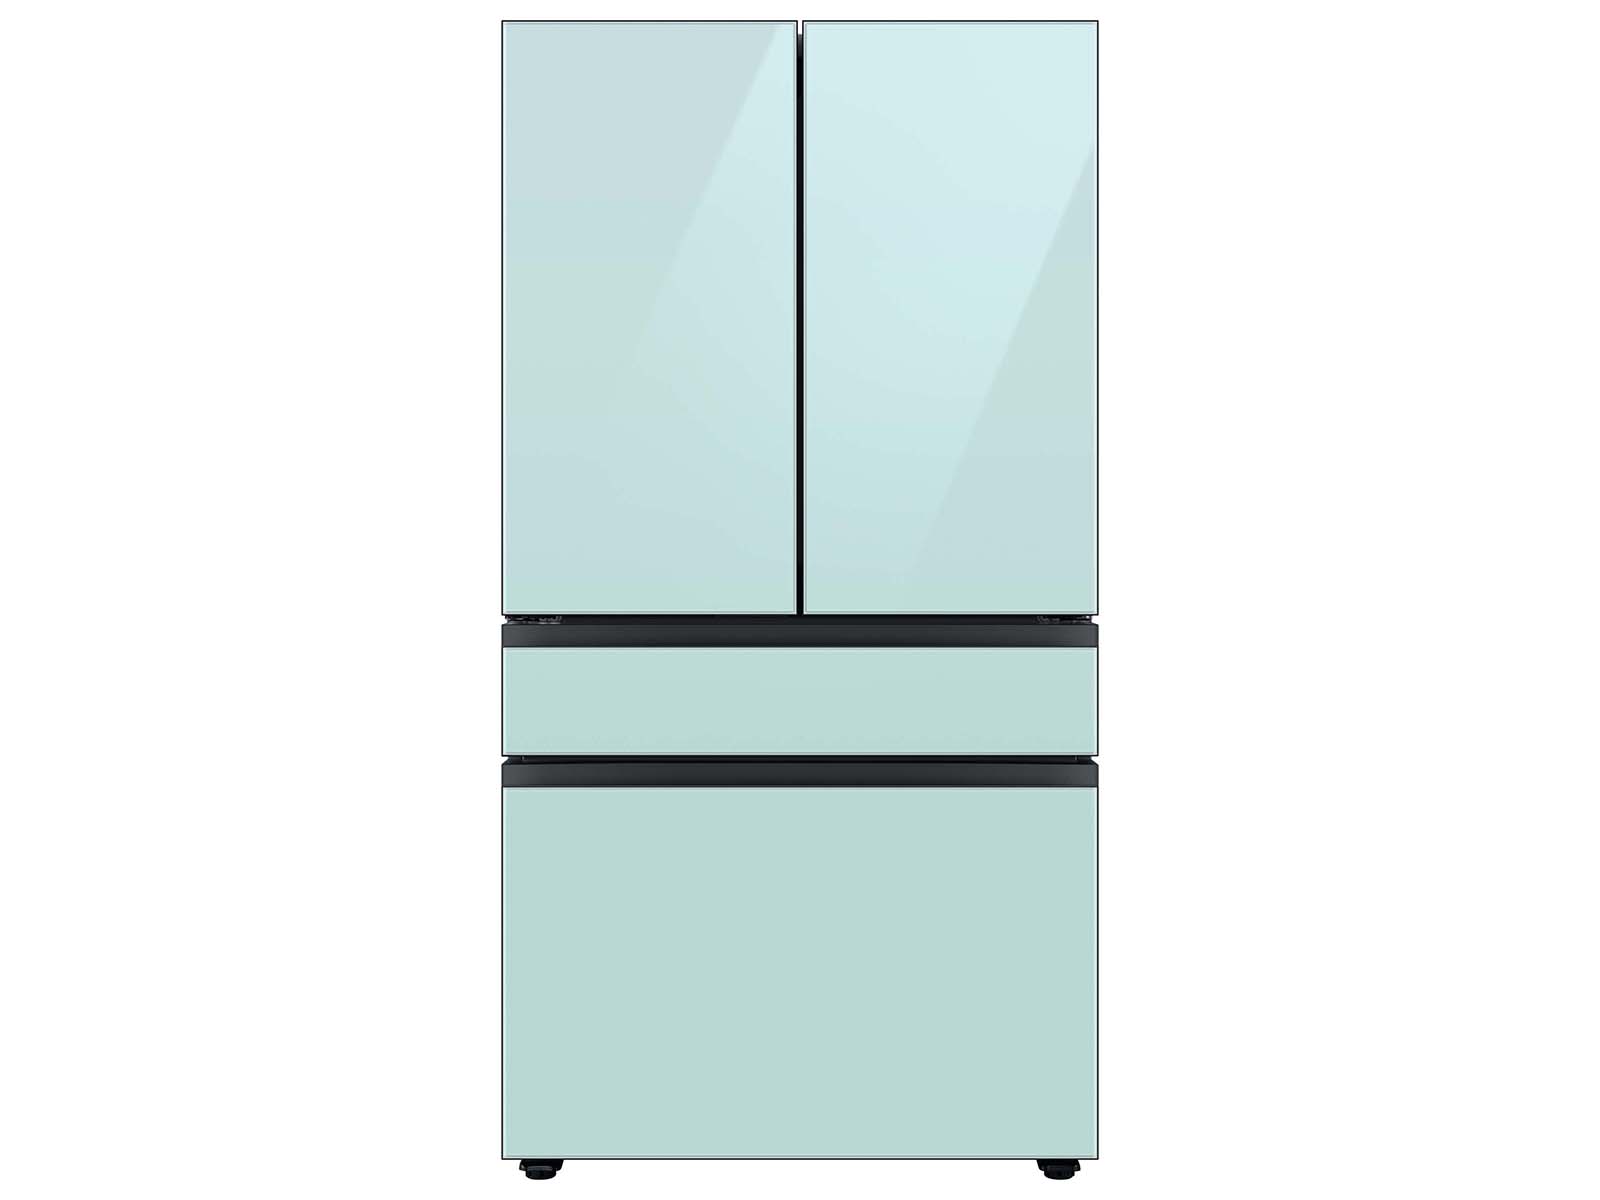 Bespoke 4-Door French Door Refrigerator (23 cu. ft.) with Customizable Door Panel Colors and Beverage Center&trade; in Morning Blue Glass